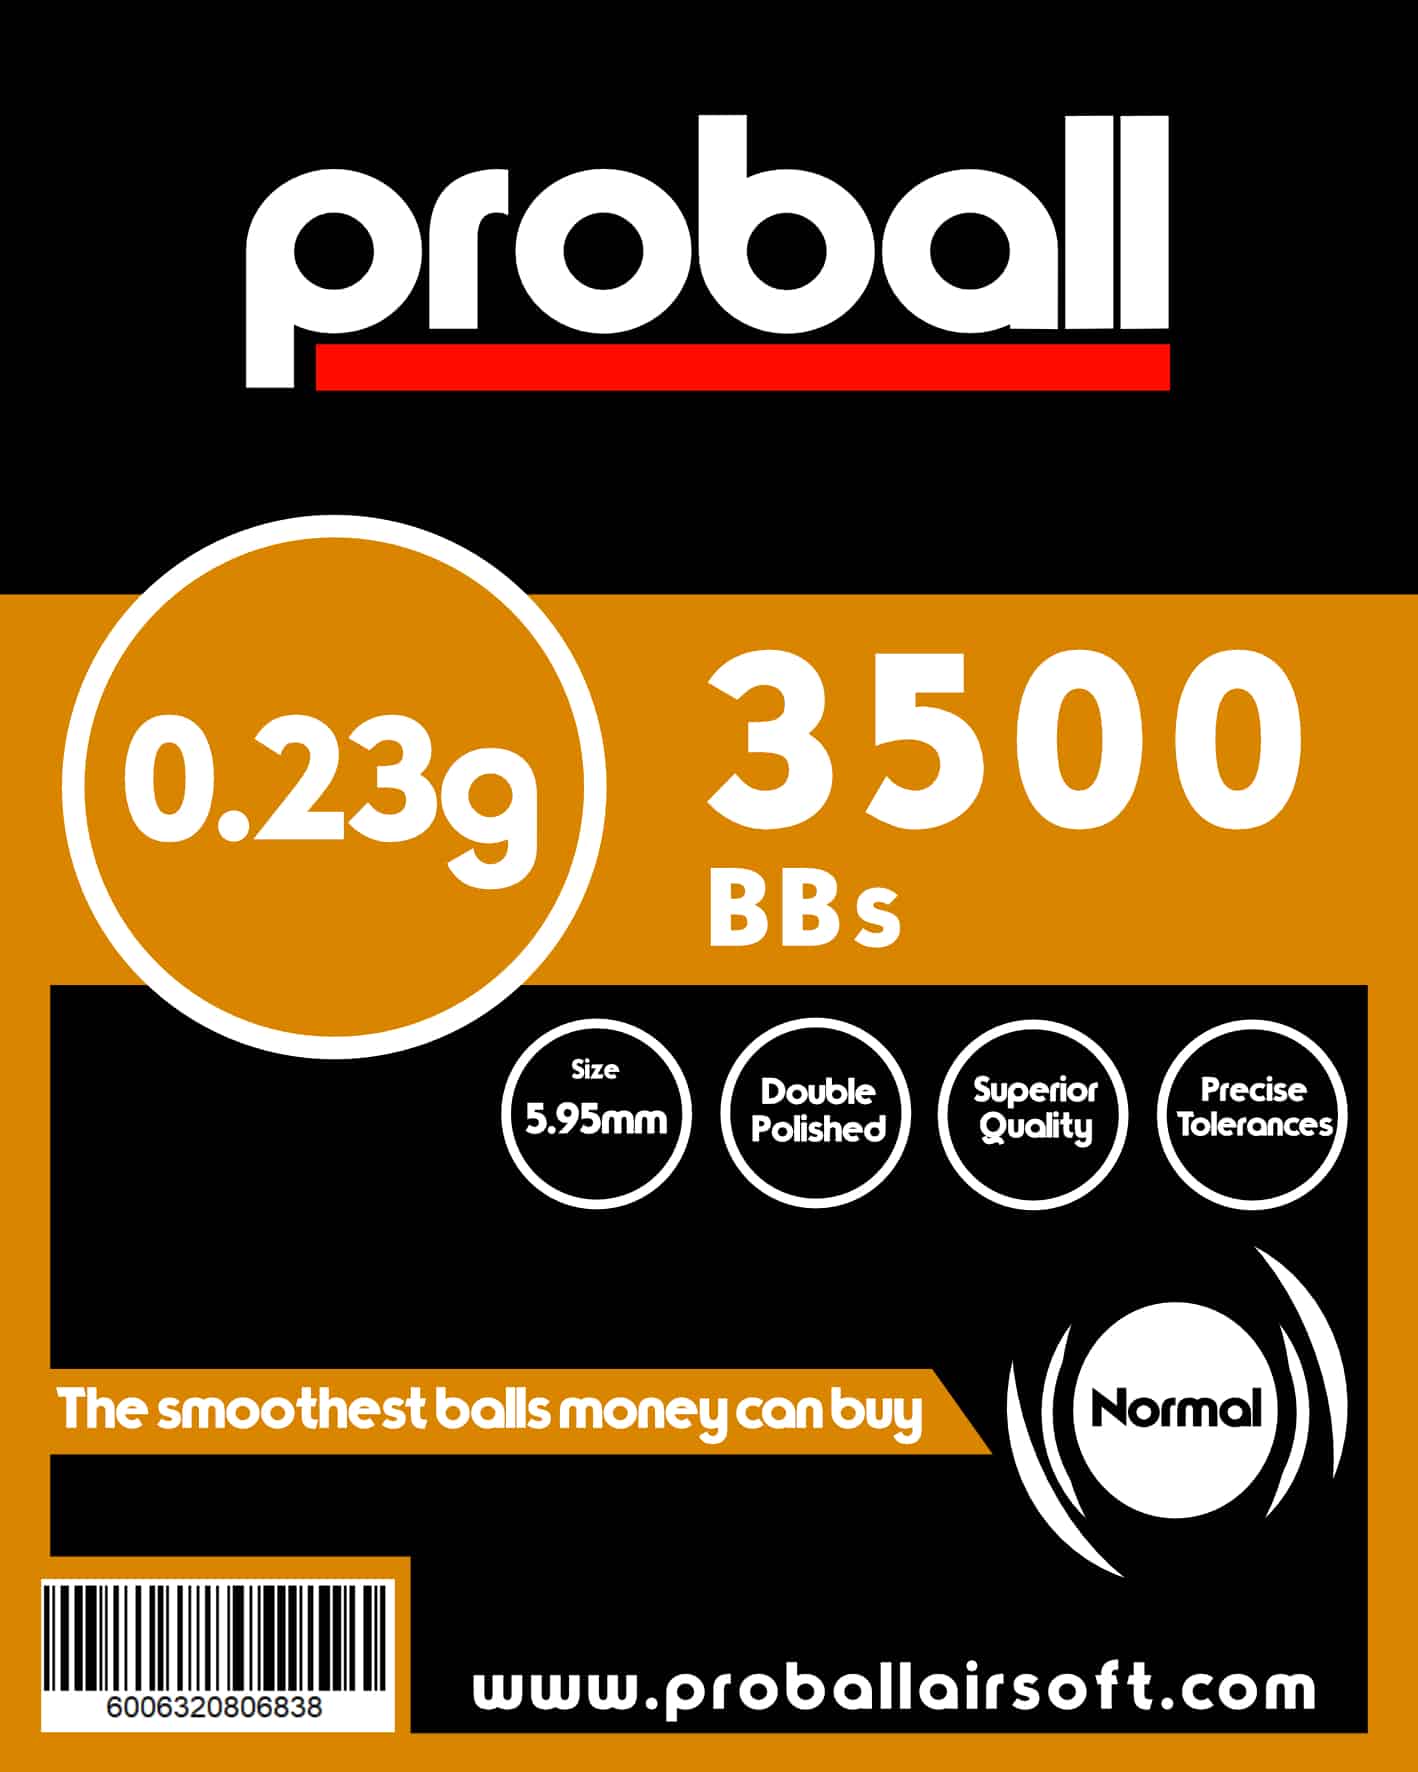 20 x Proball 0.23g Bbs (3500)